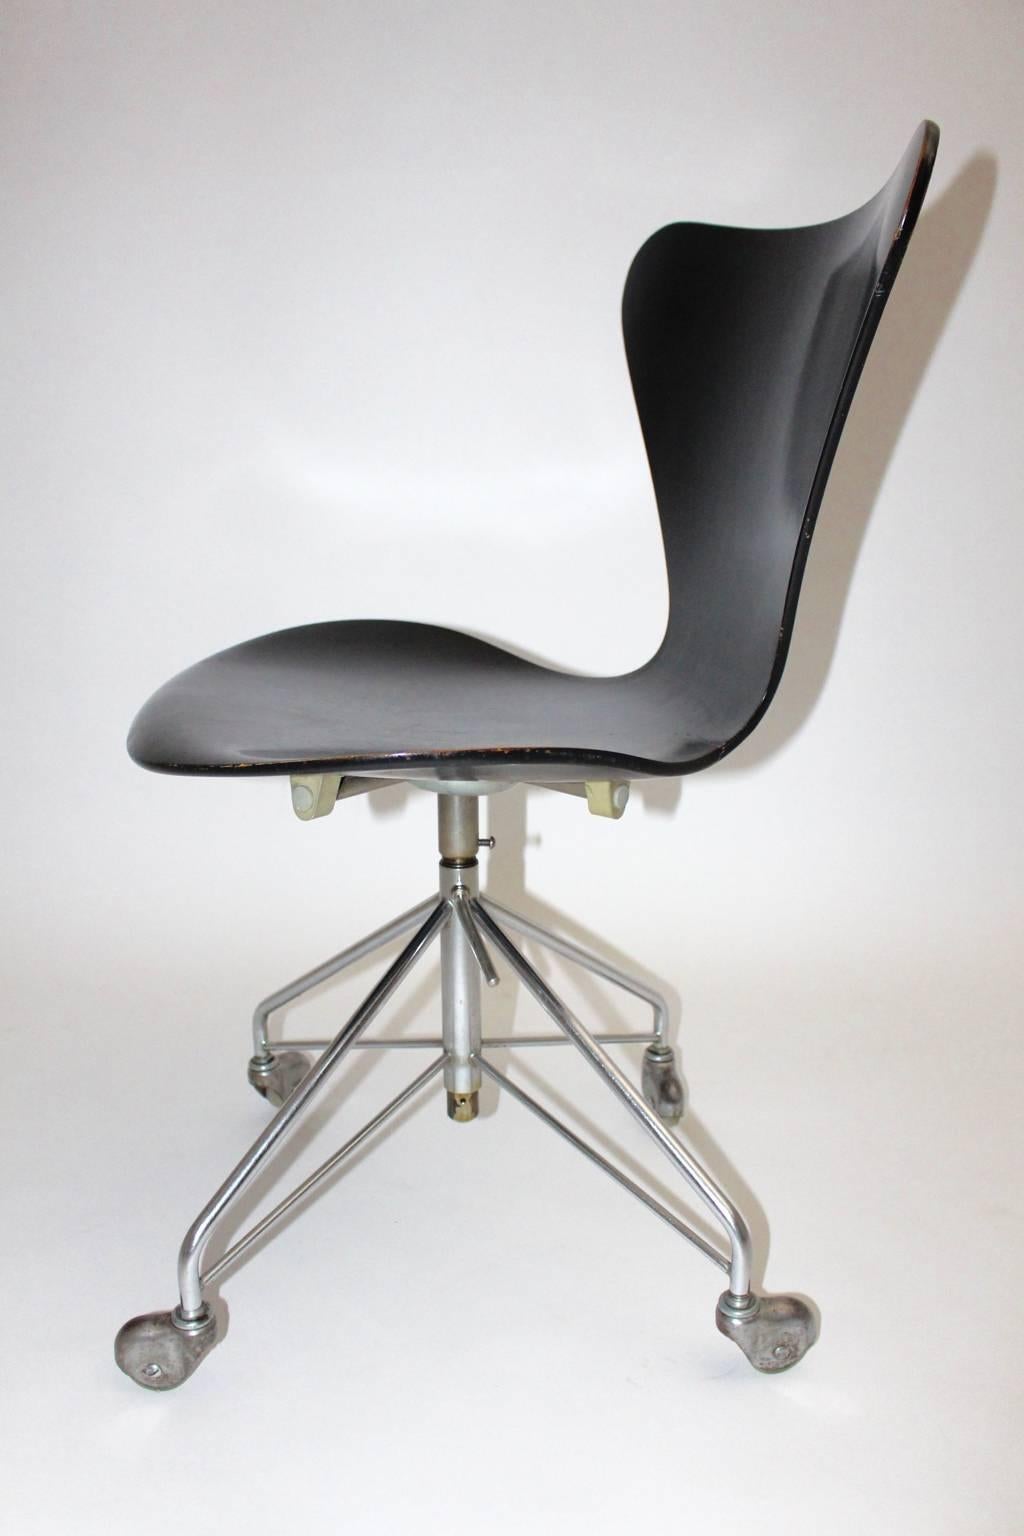 Mid-Century Modern Mid Century Modern Vintage Black Office Chair by Arne Jacobsen 1950s, Denmark For Sale